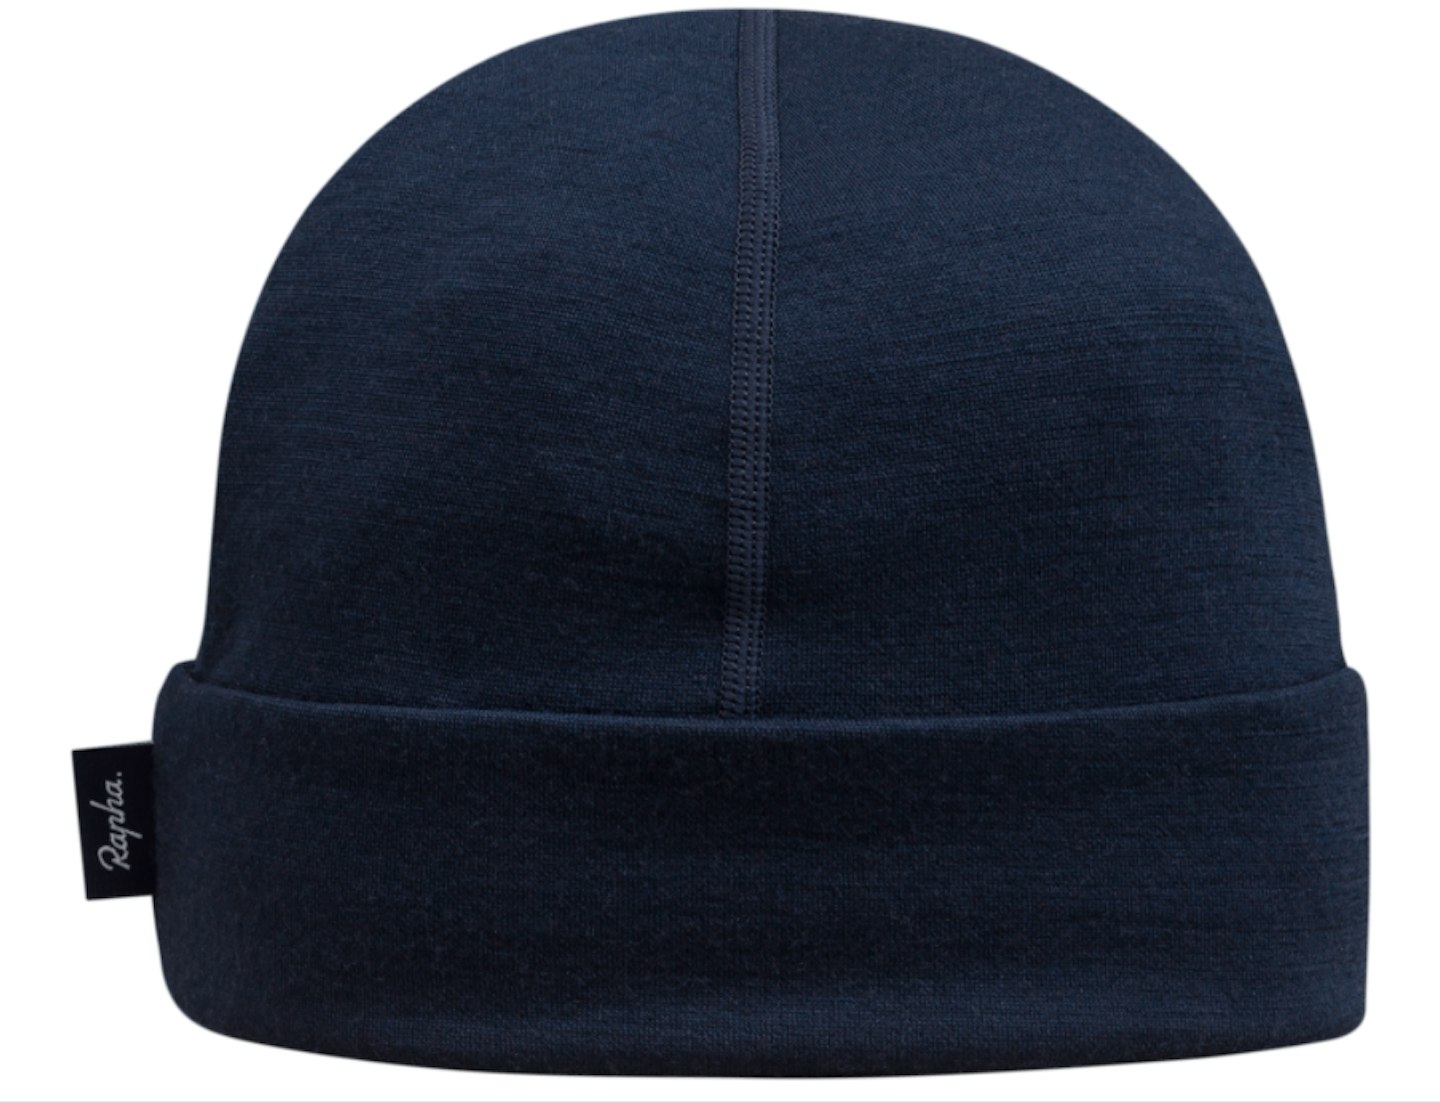 Rapha, Merino Hat, £35